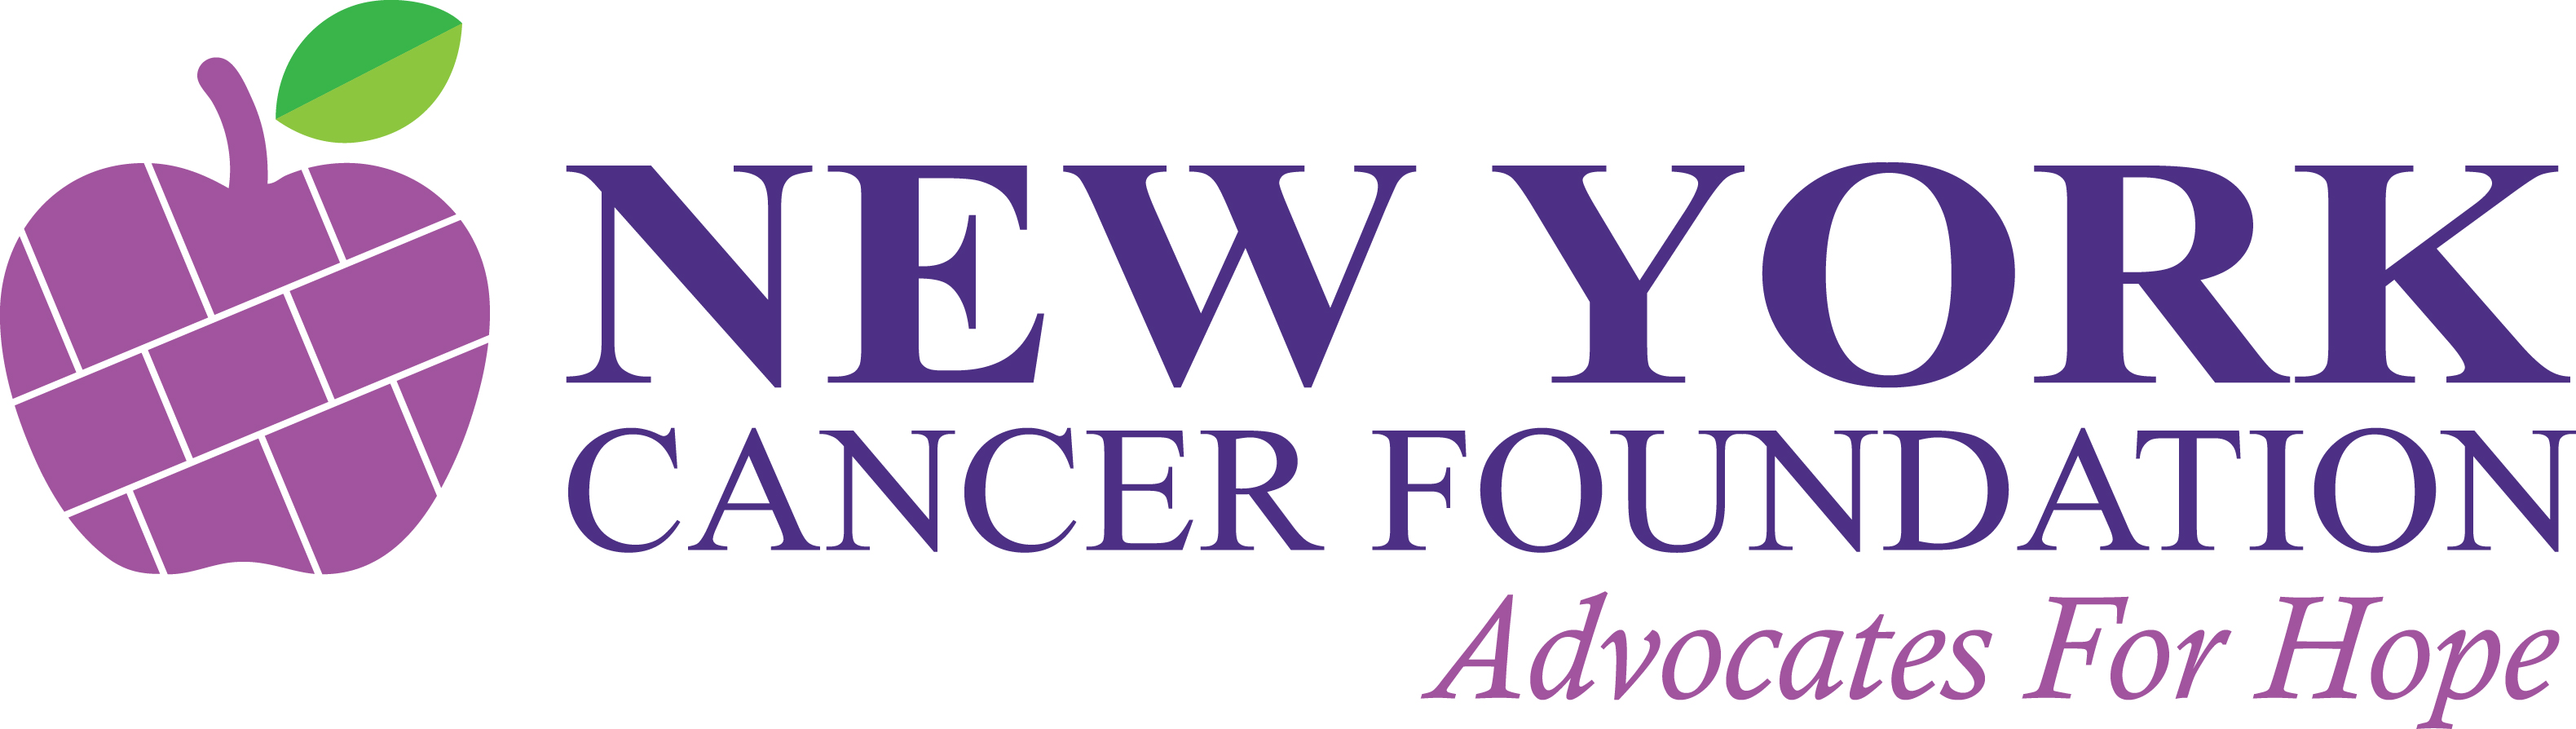 New York Cancer Foundation logo